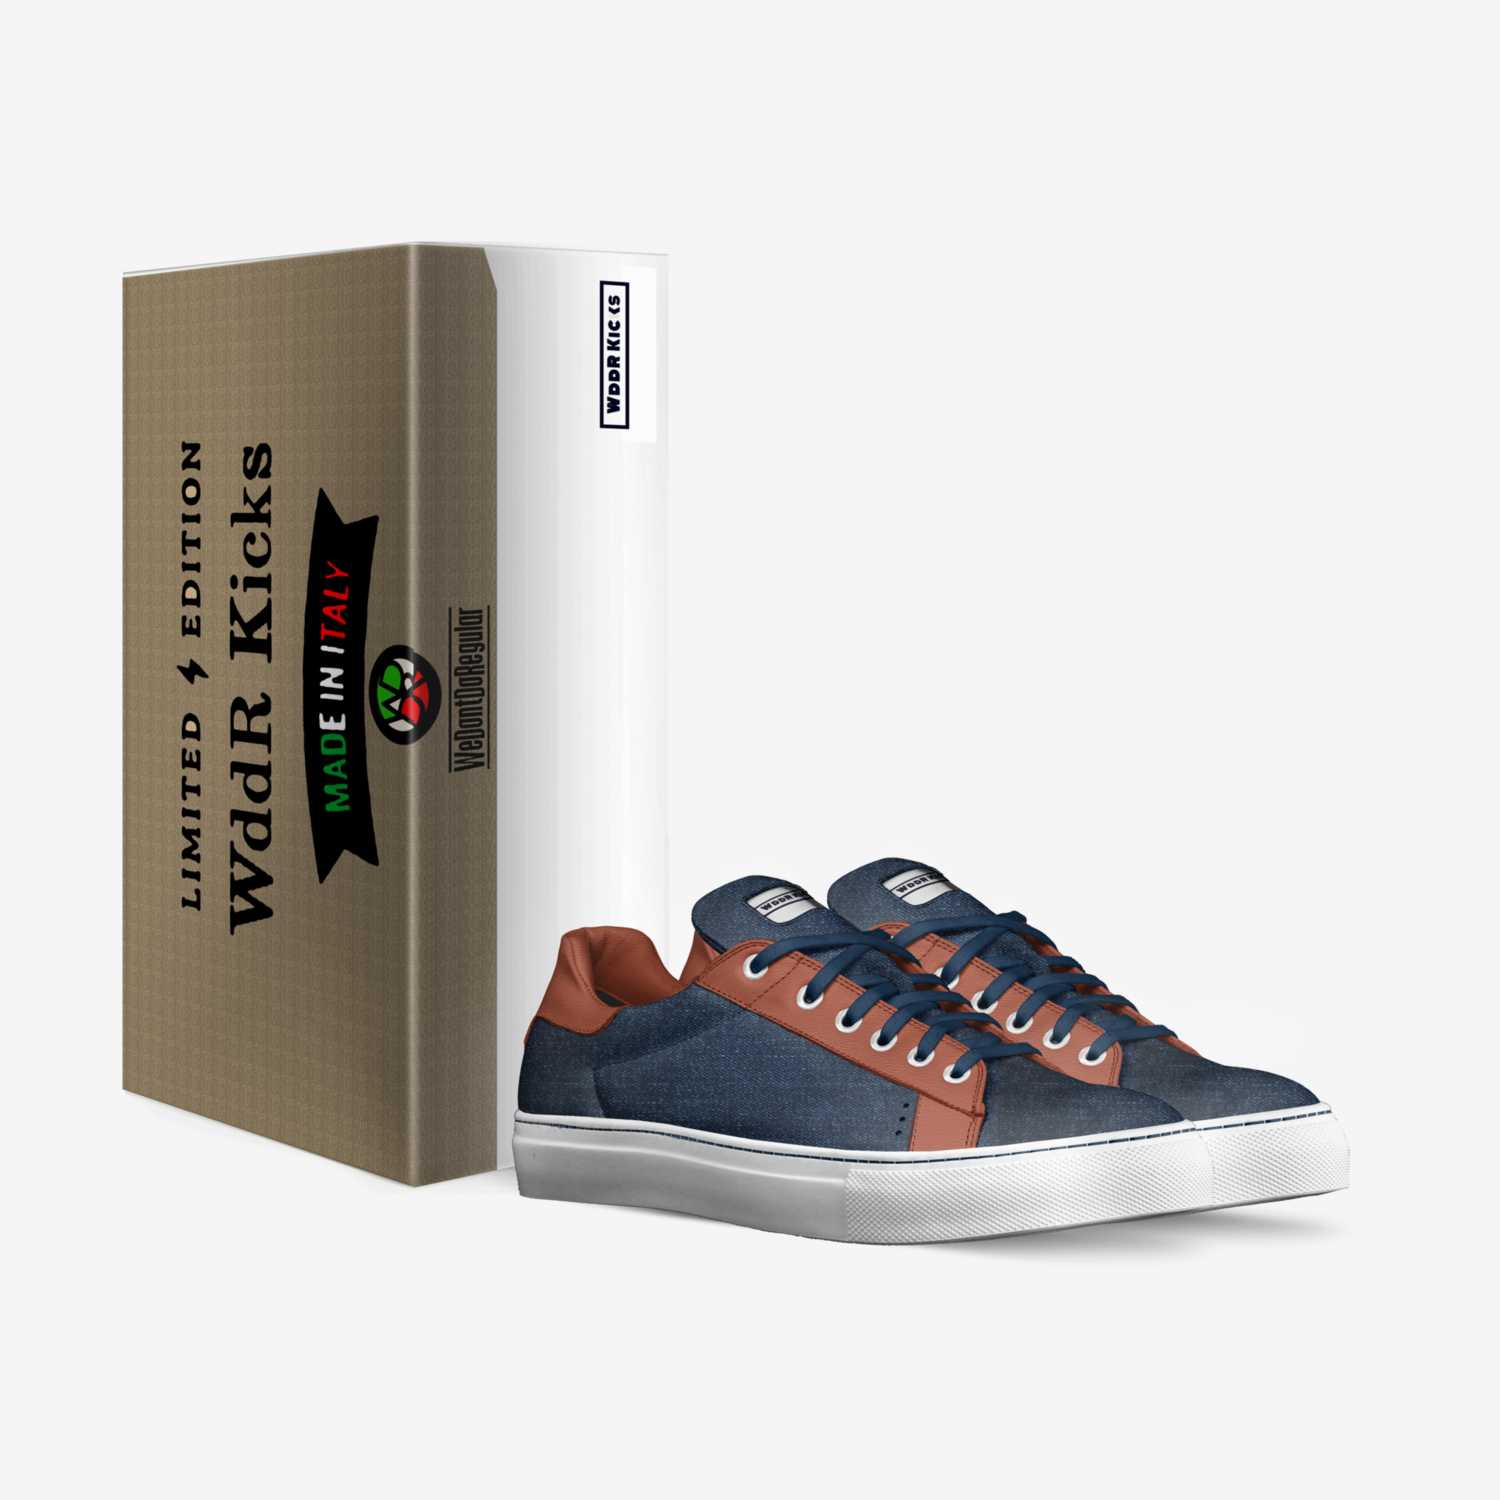 WddR Kicks custom made in Italy shoes by Scottie Ma'Valous | Box view